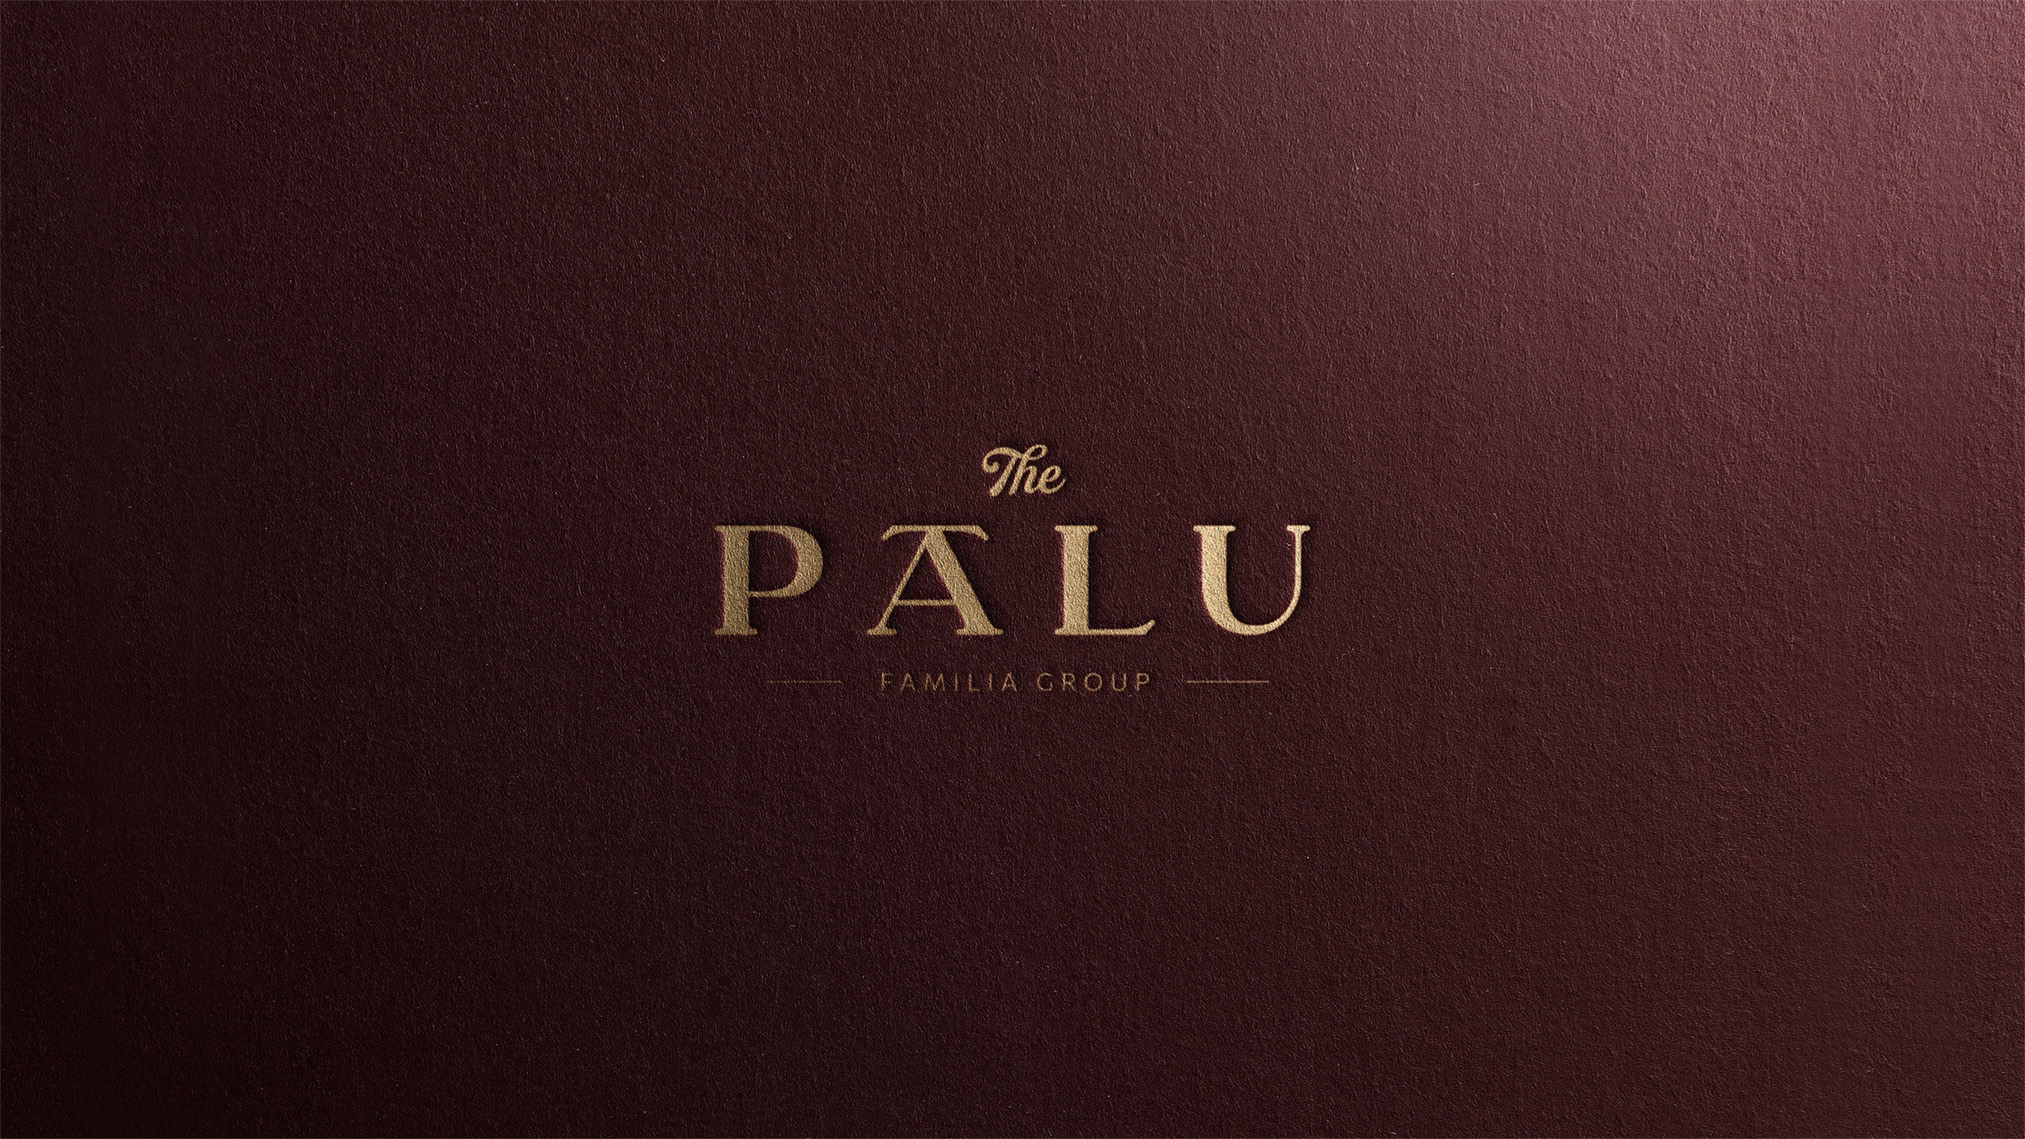 Palu Familia Group Restaurants Brand Name and Identity Design